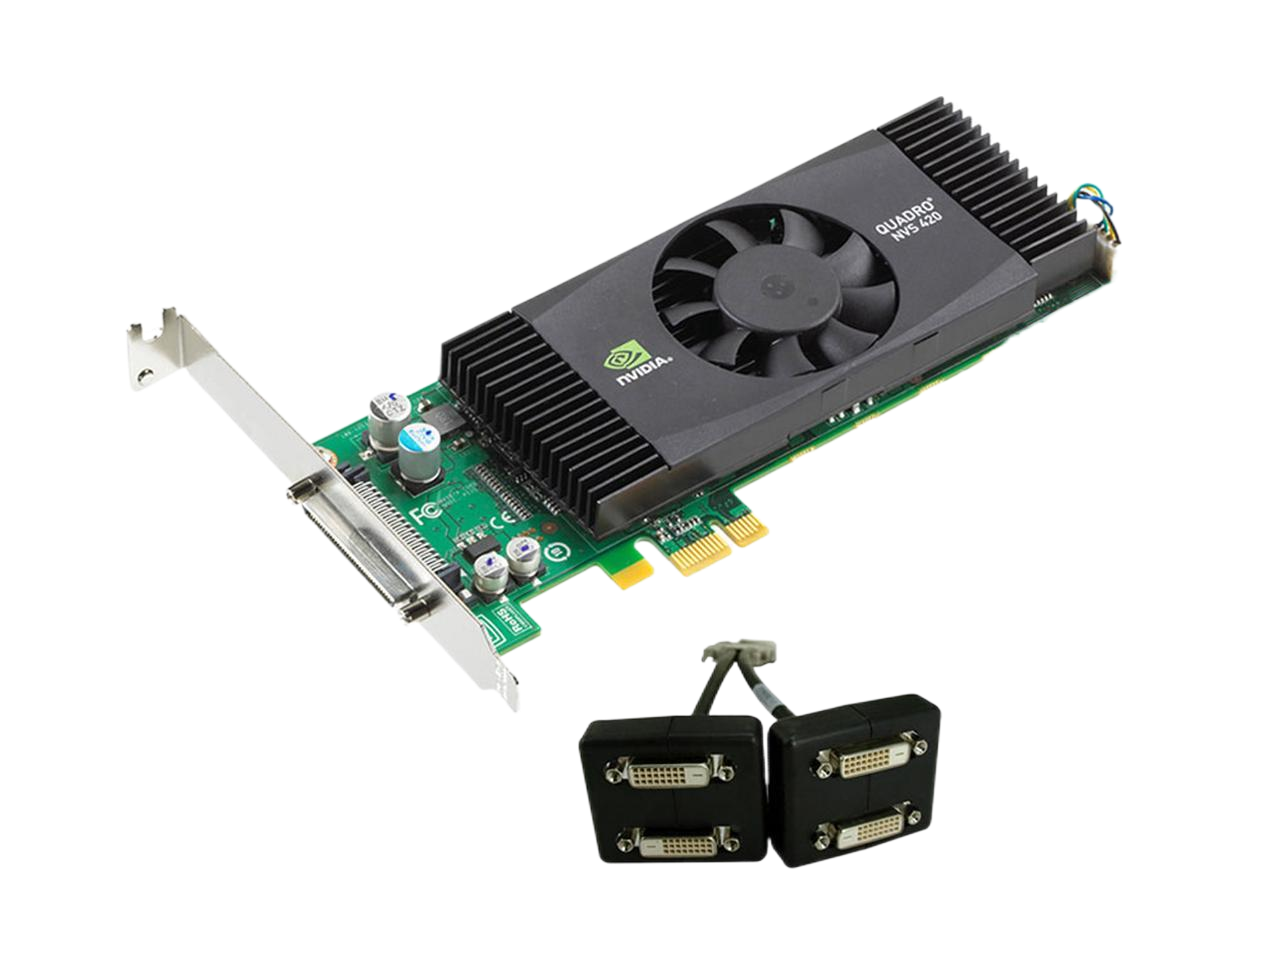 PNY Quadro NVS 420 512MB 128-bit GDDR3 PCI Express x16 Low Profile Ready Workstation Video Card VCQ420NVS-X16-PB (Refurbished)